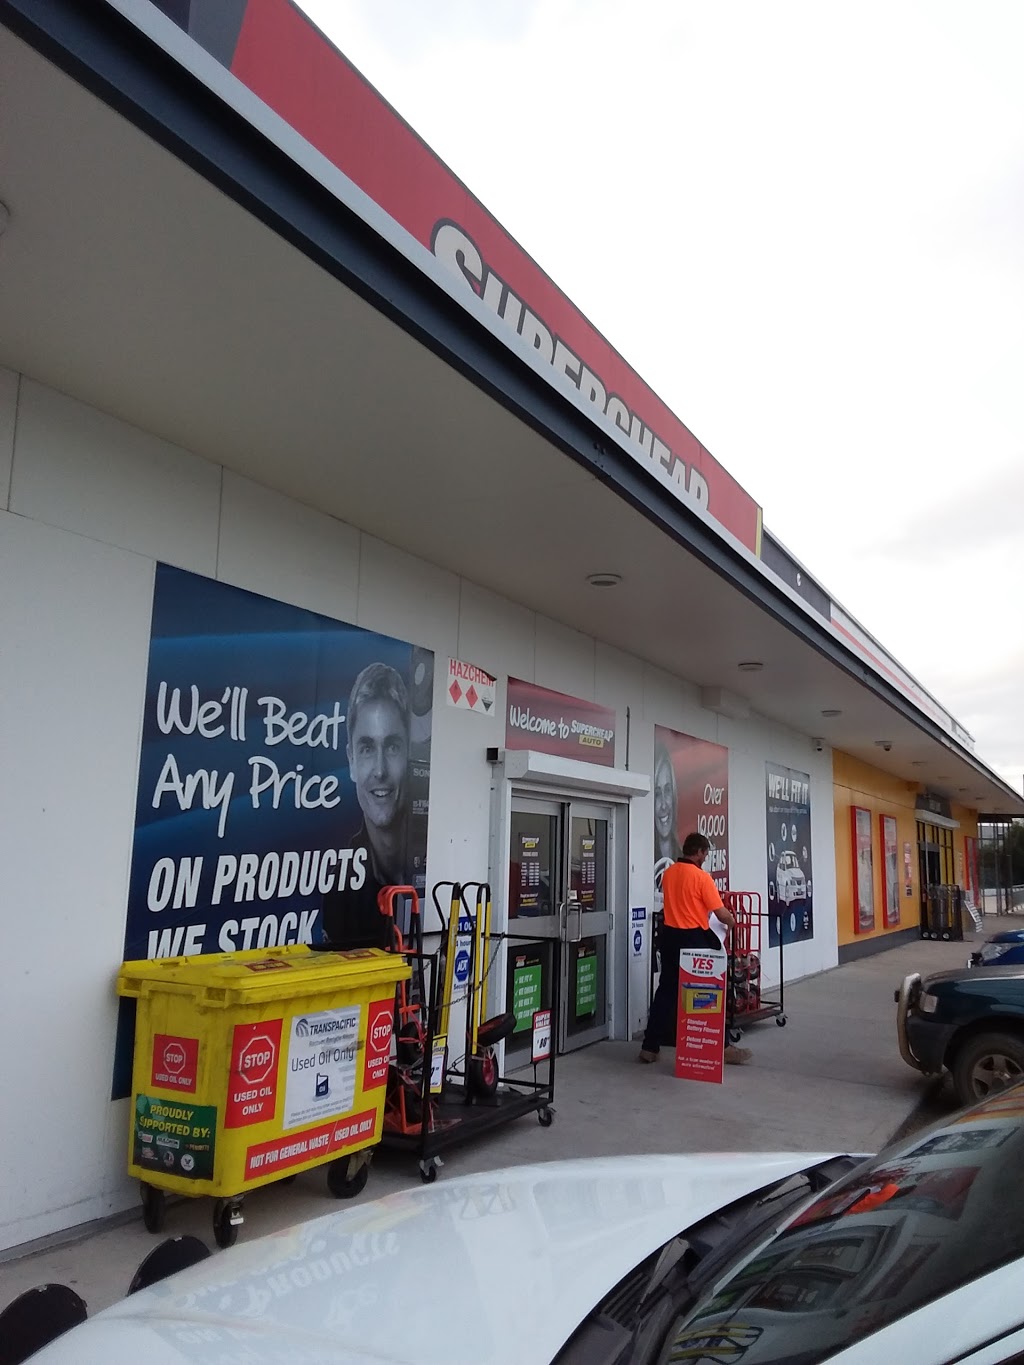 Supercheap Auto Cessnock | electronics store | Bigw Complex, 10 Darwin St, Cessnock NSW 2325, Australia | 0249901037 OR +61 2 4990 1037